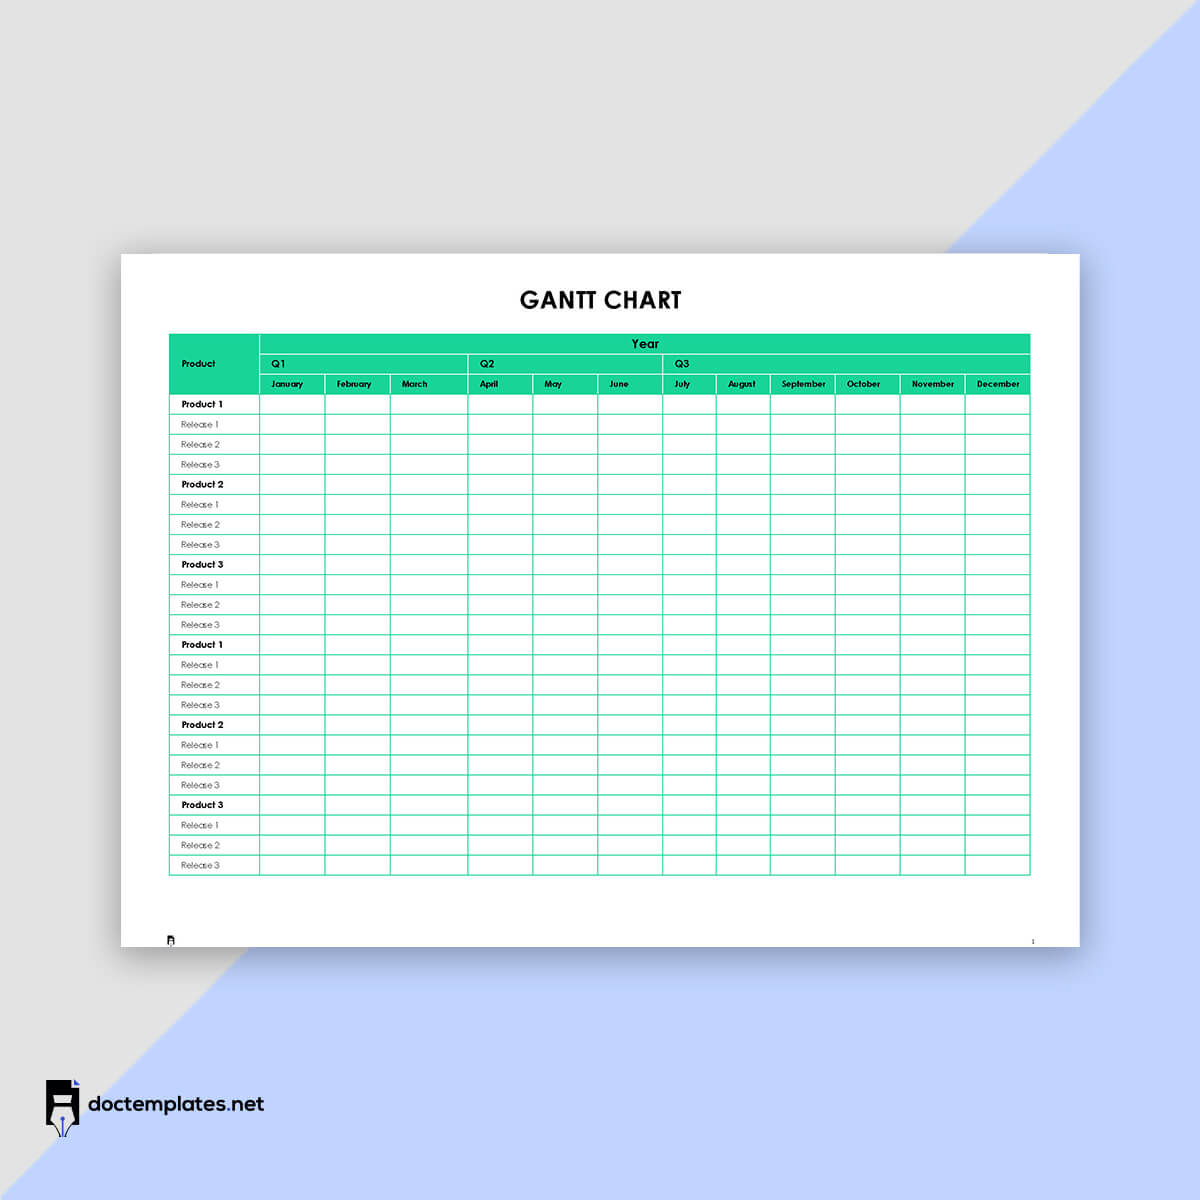 Gantt chart example-01
